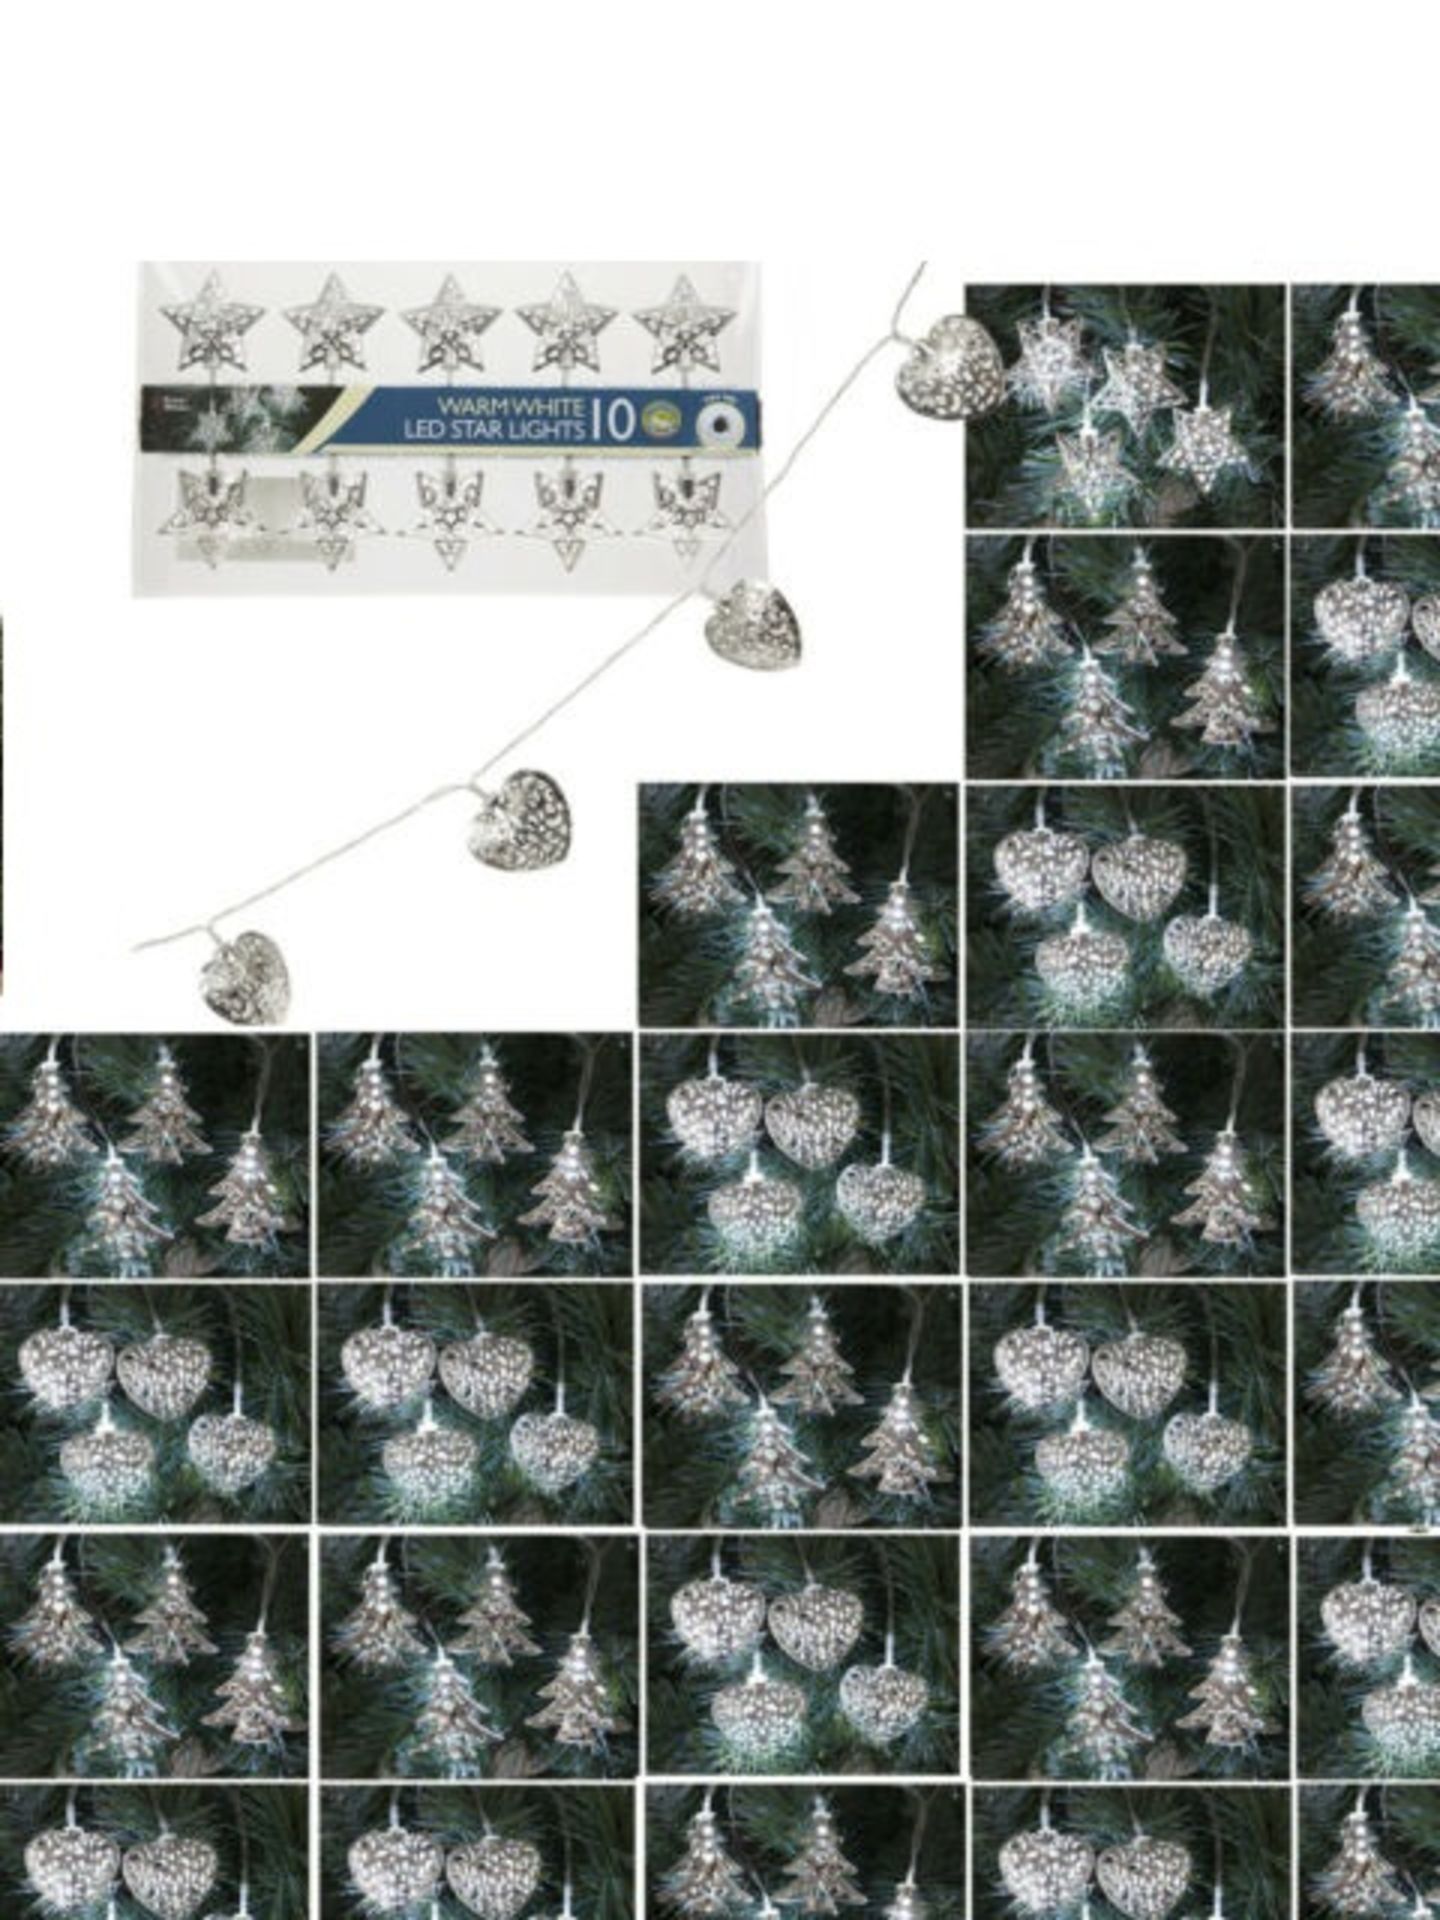 + VAT Brand New 10 LED Decorative Christmas Lights - 3 Assorted Designs